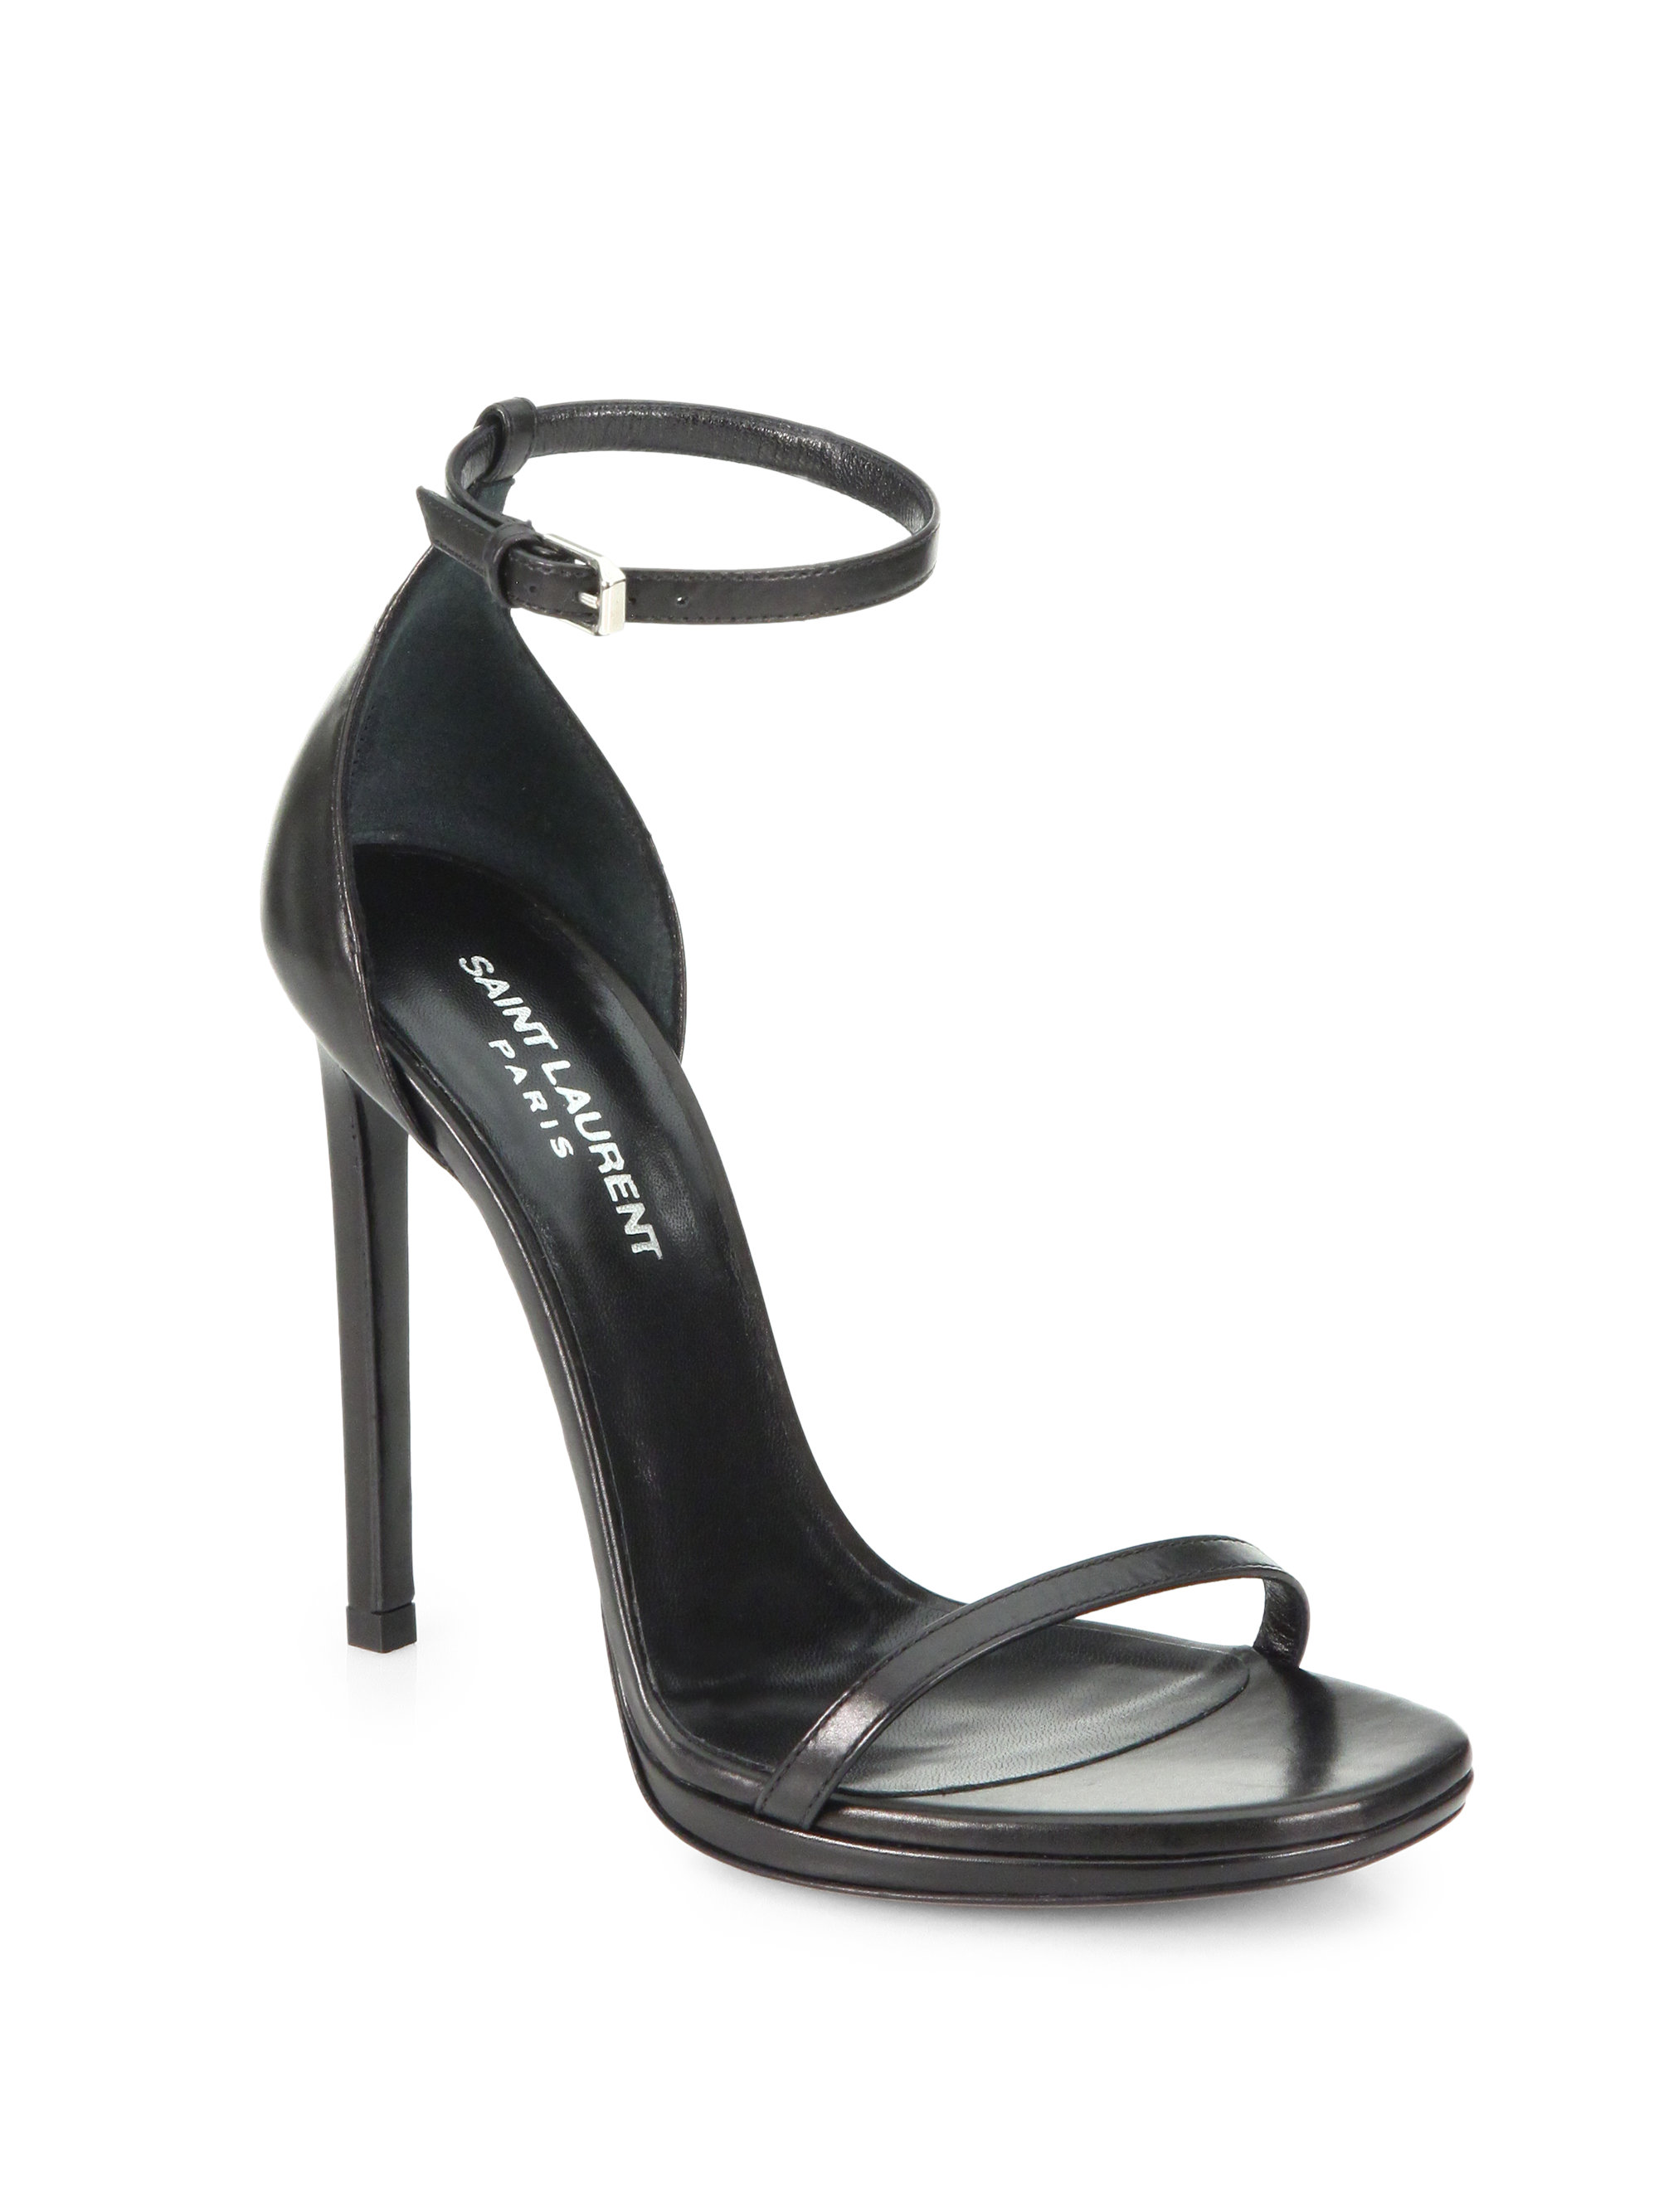 Saint Laurent Jane Leather Ankle Strap Sandals in Black - Lyst